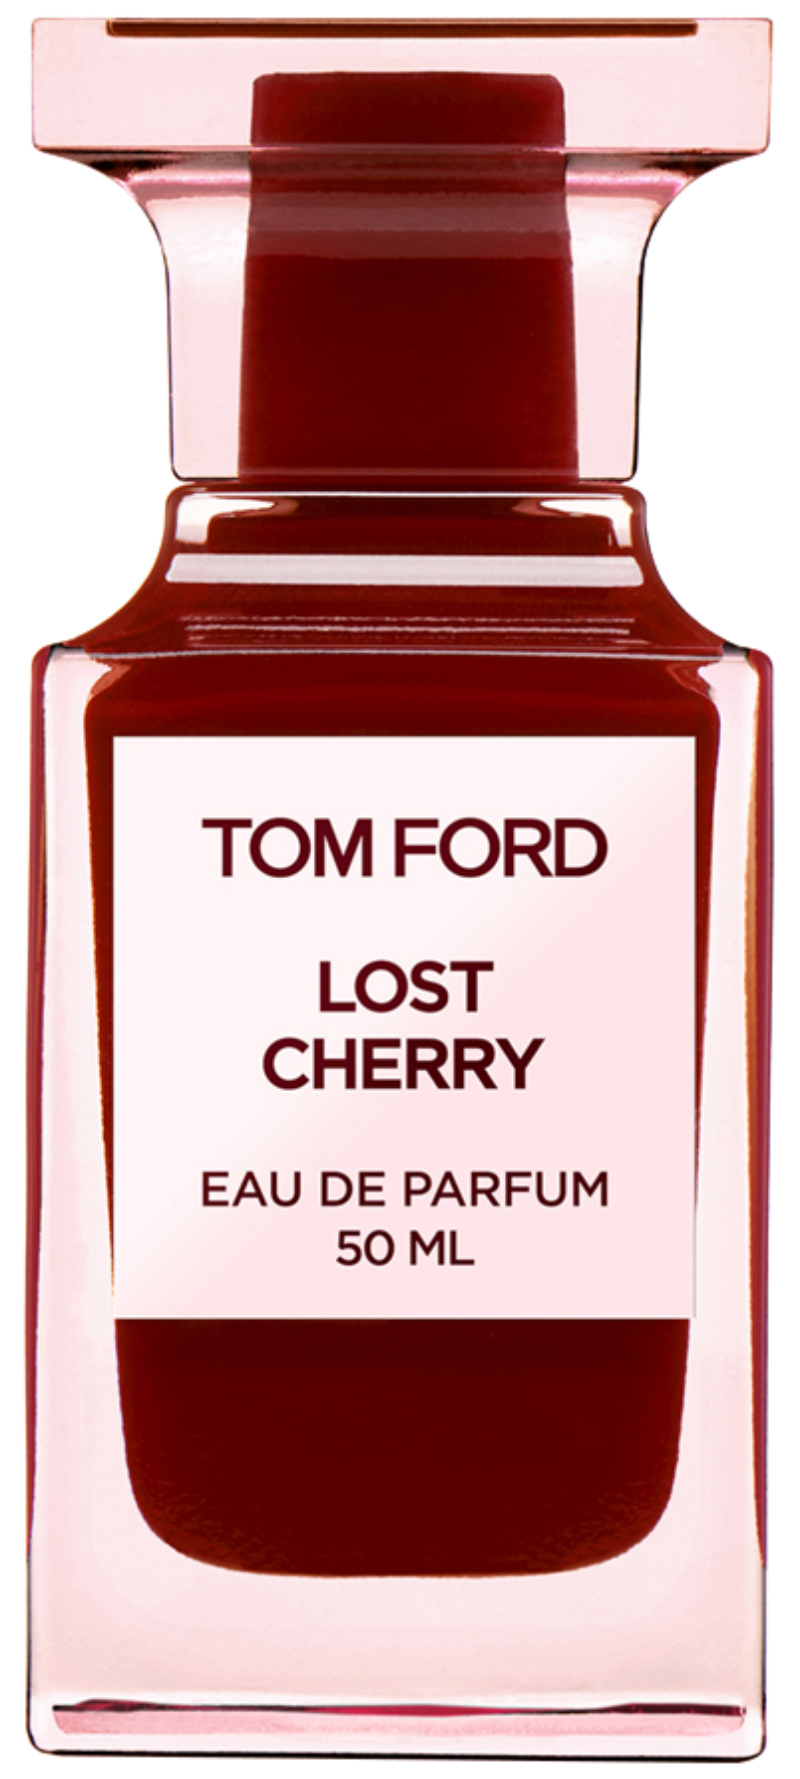 Tom Ford - Tom Ford Lost Cherry EdP 50 ml - 888066082341